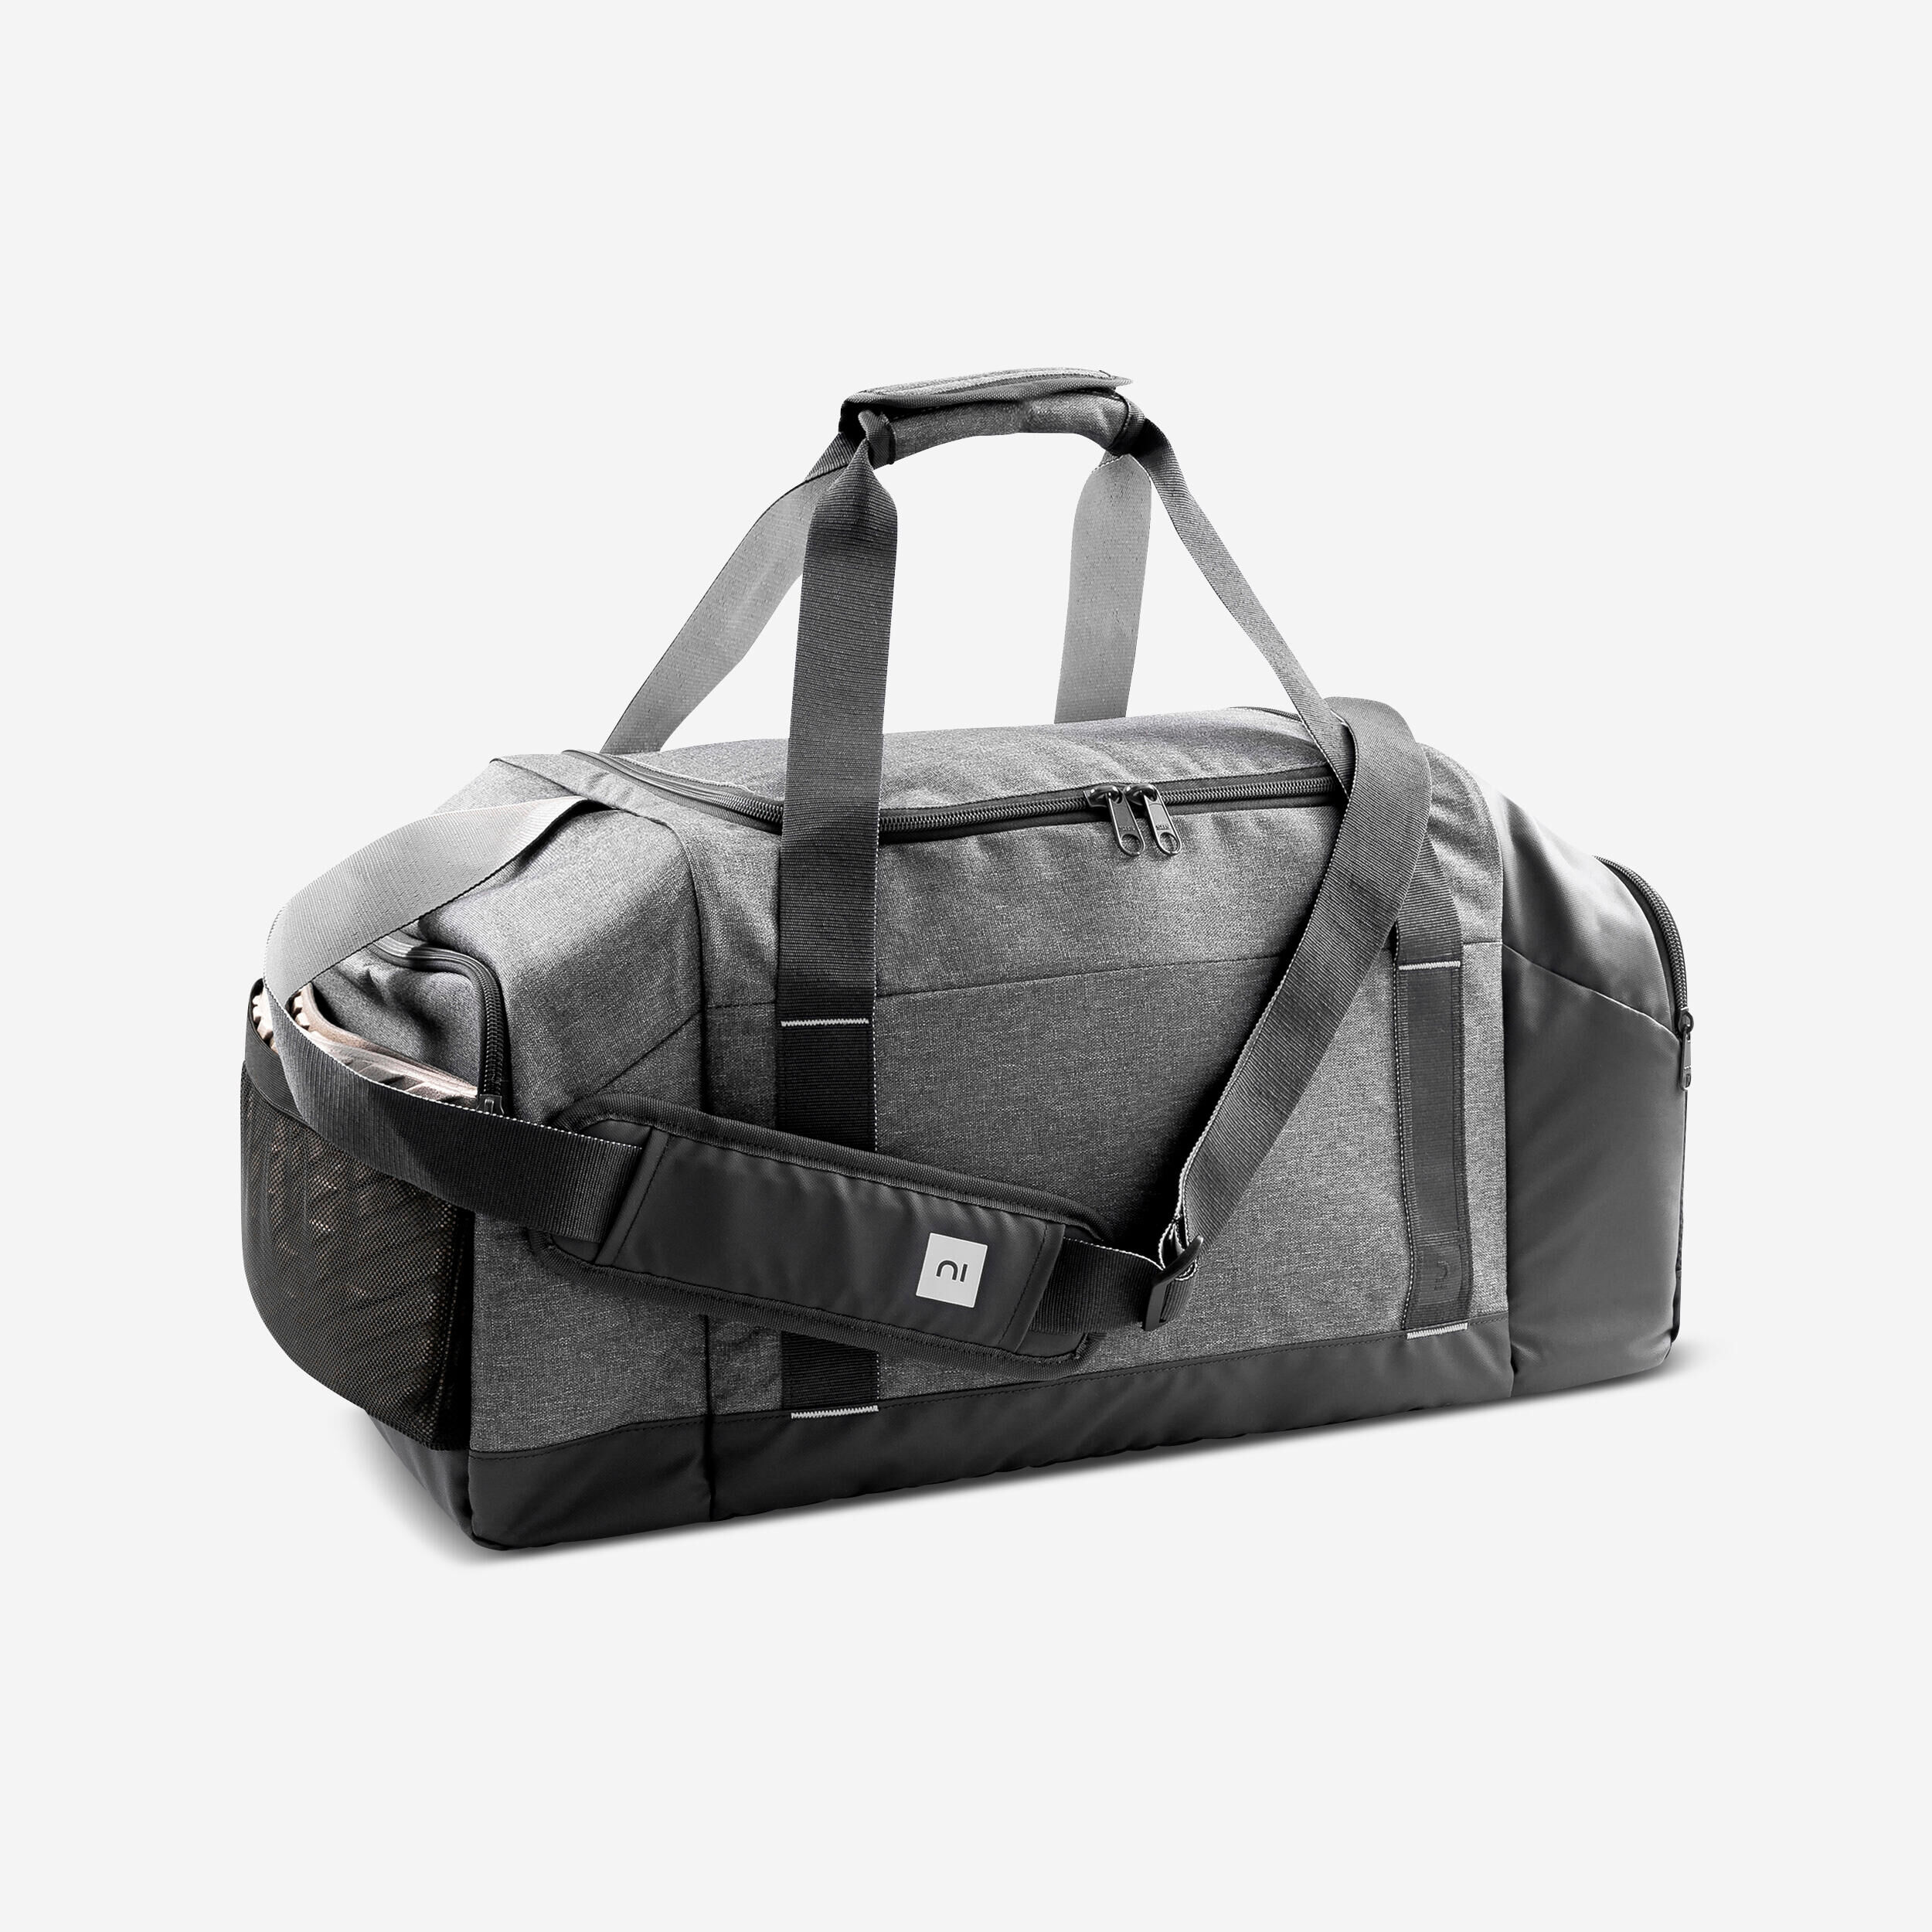 KIPSTA 55L Sports Bag Academic - Black/Grey